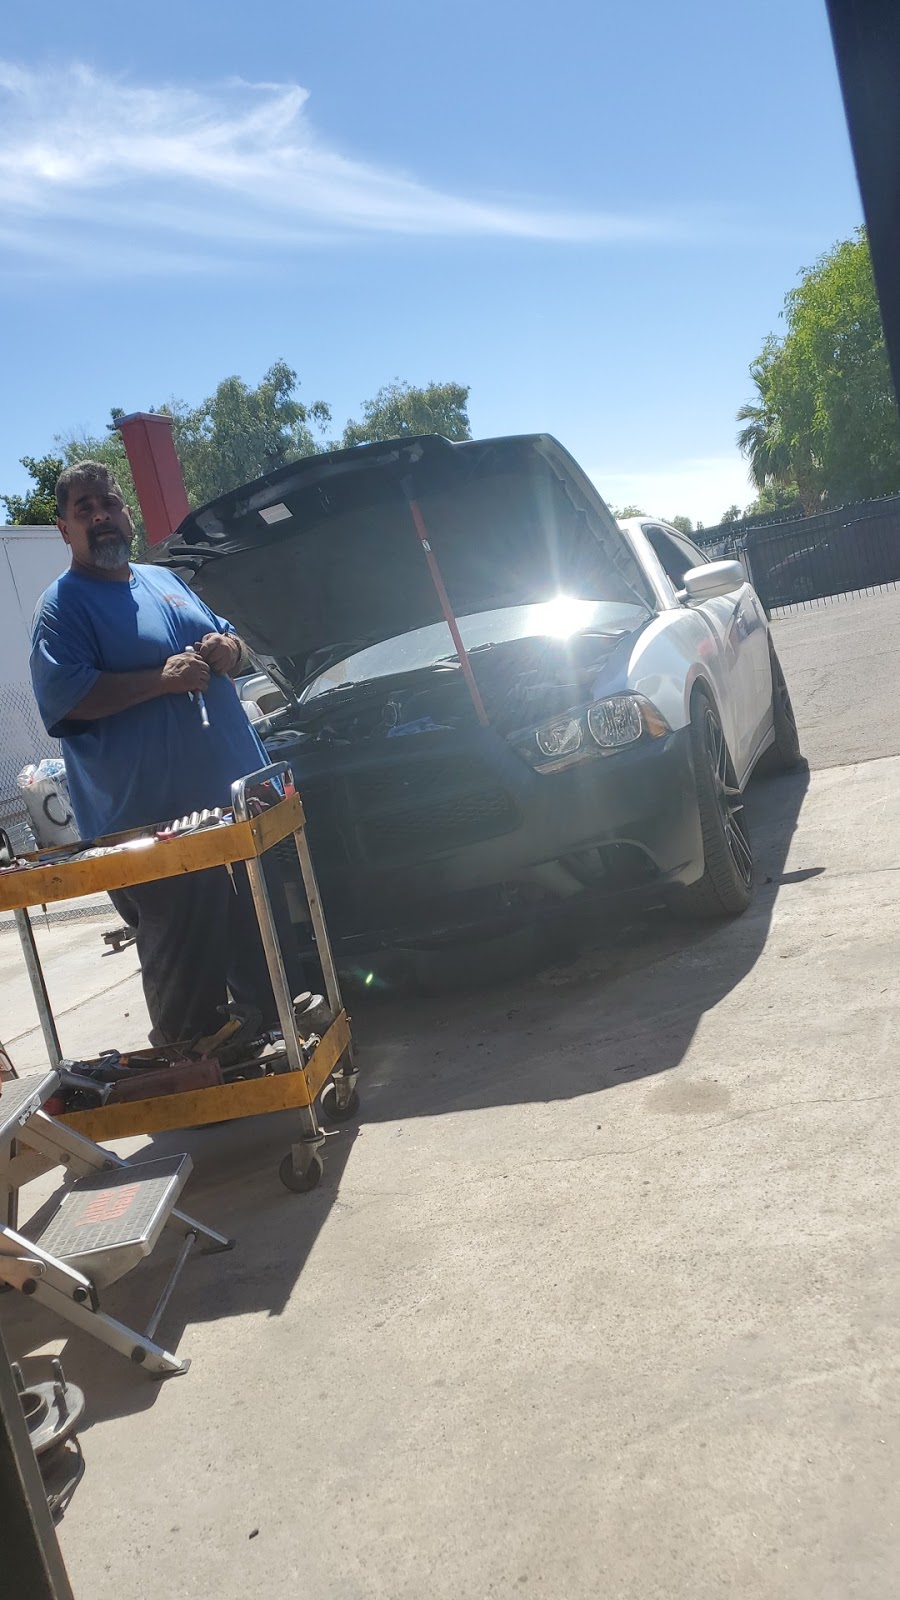 Rj’s Discount Auto Repair | Glendale, AZ 85301 | Phone: (623) 206-5672